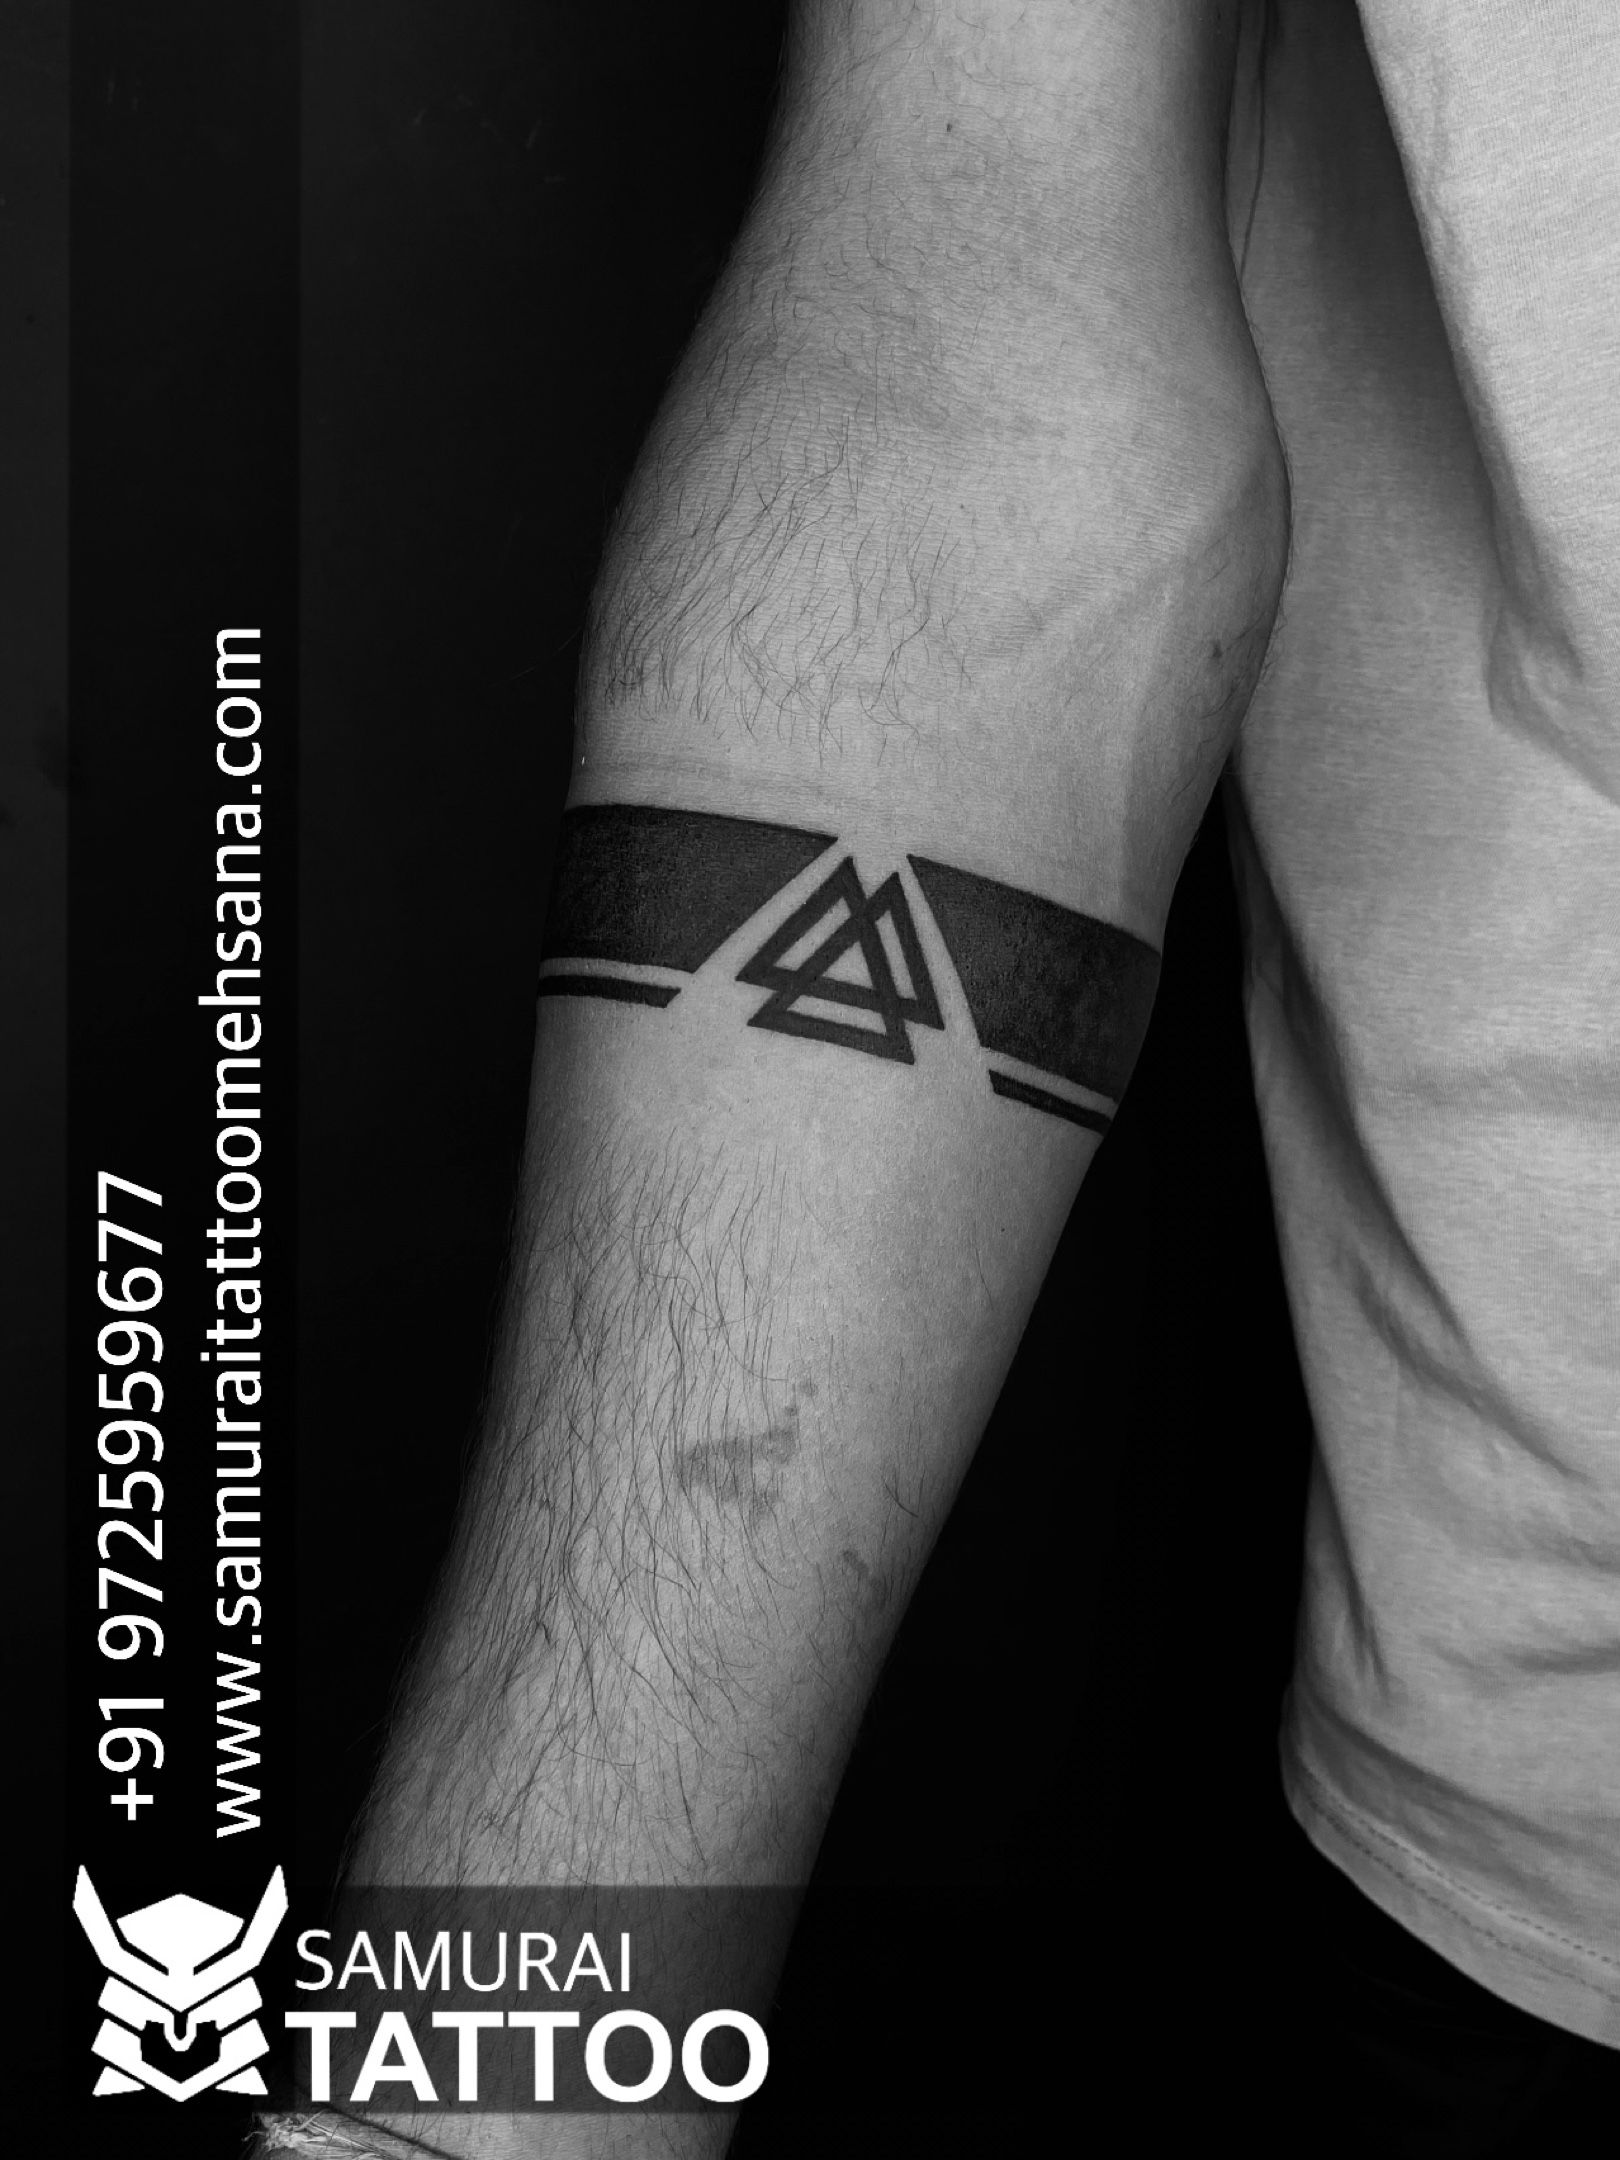 1892 Geometric Armband Tattoo Images Stock Photos  Vectors  Shutterstock